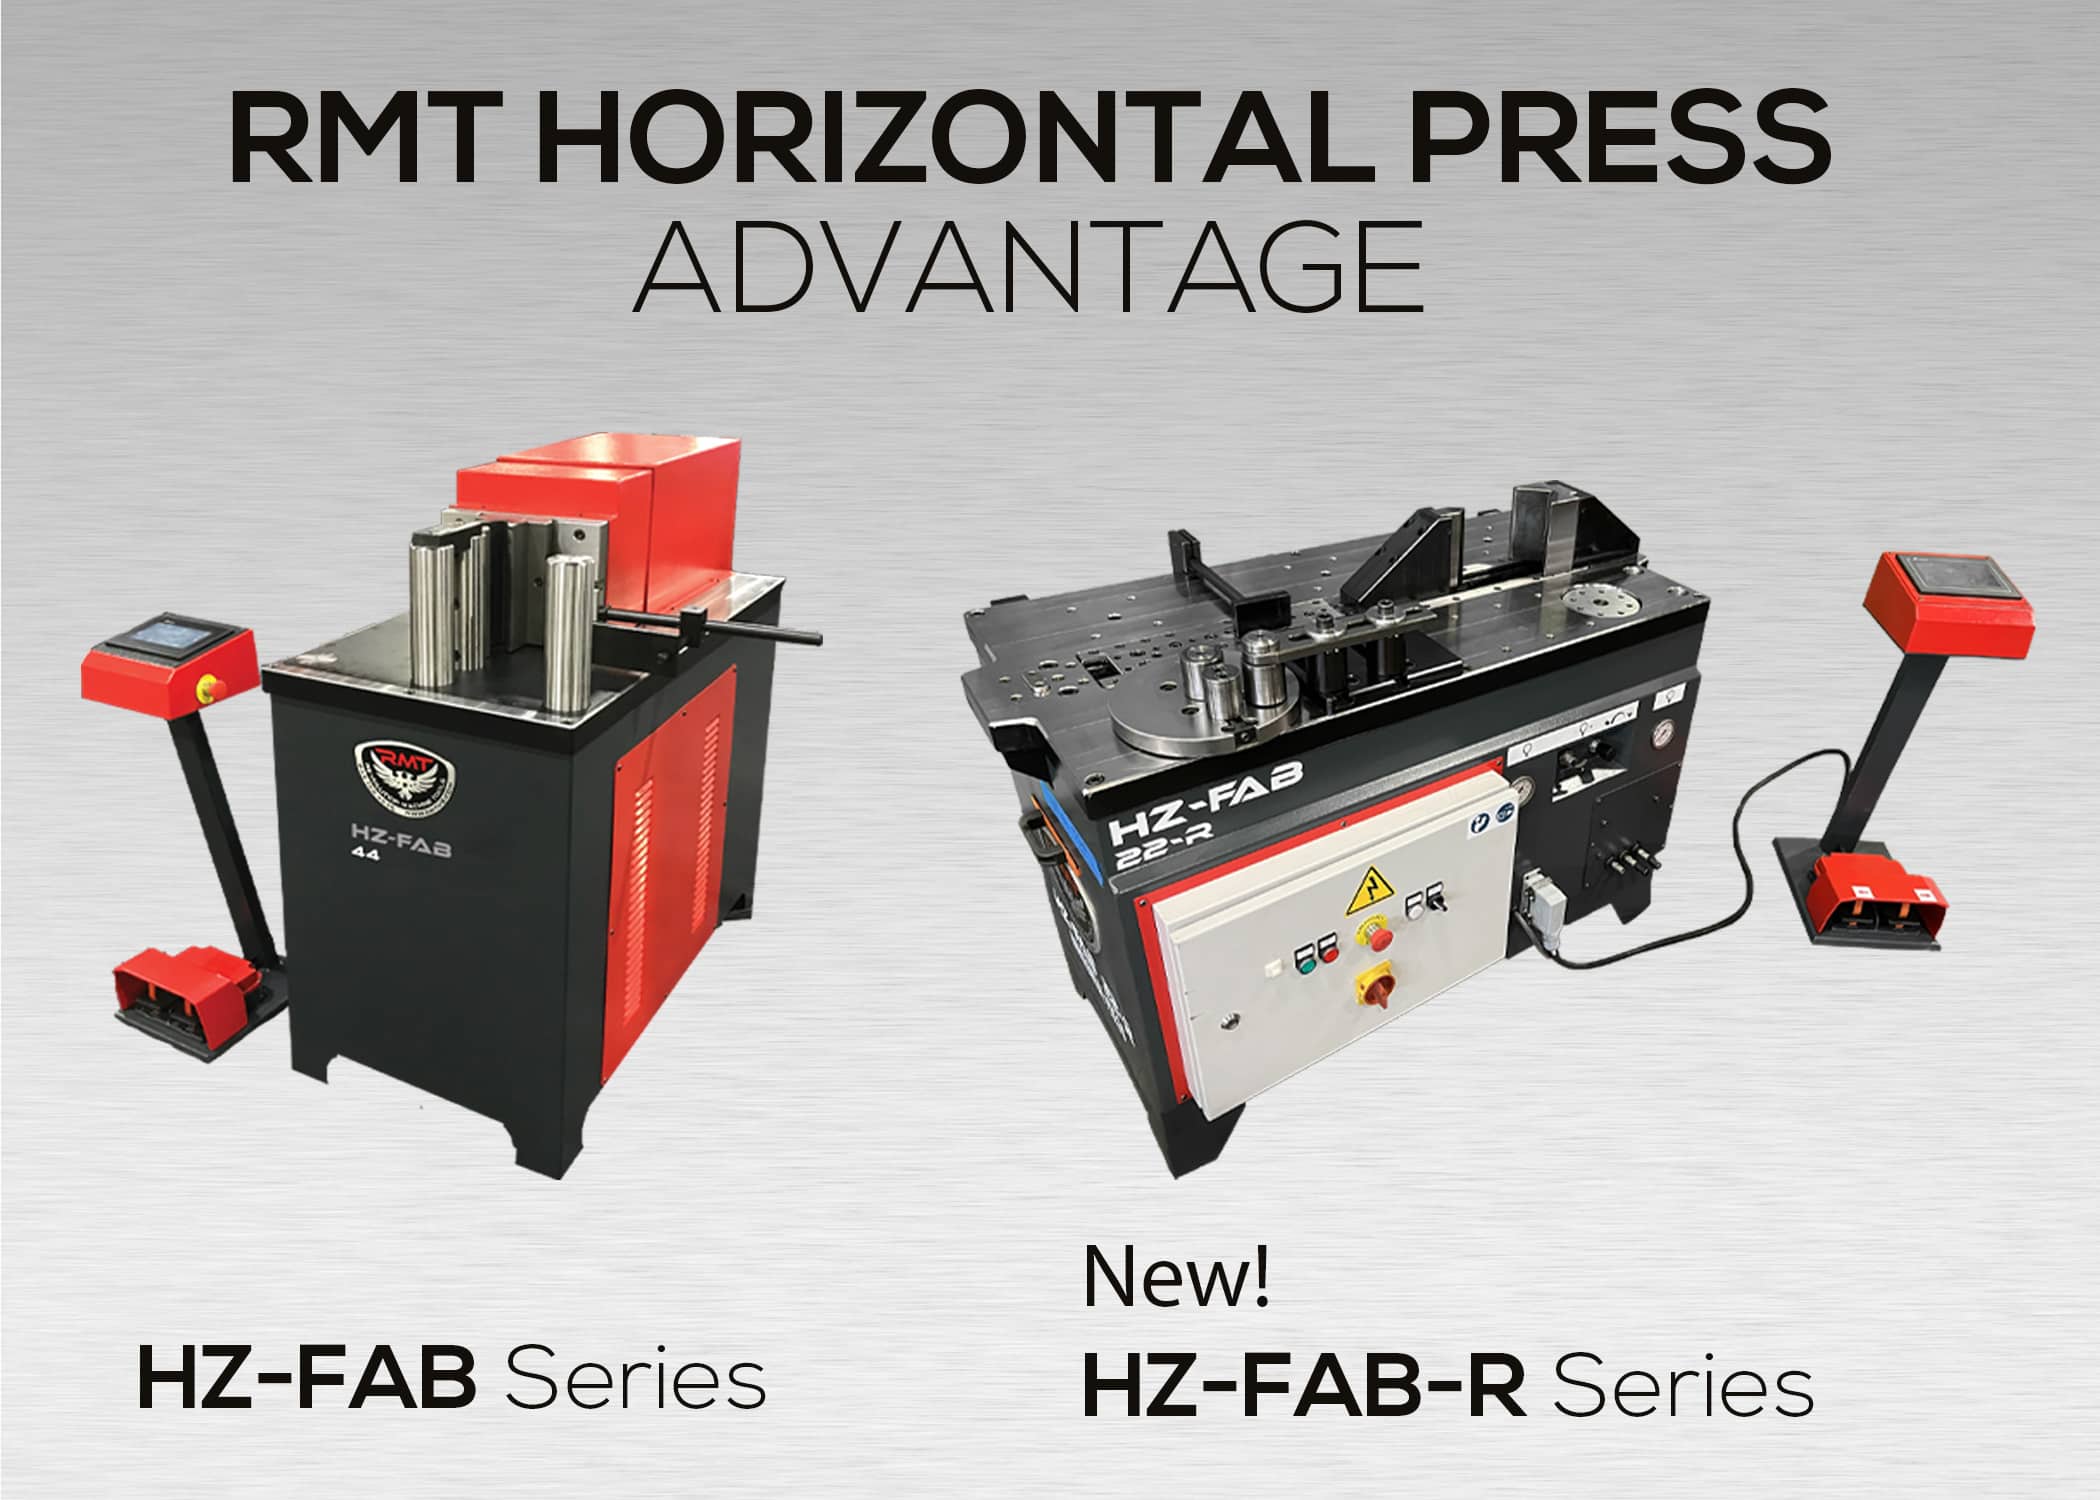 The RMT HZ-FAB Horizontal Press Advantage